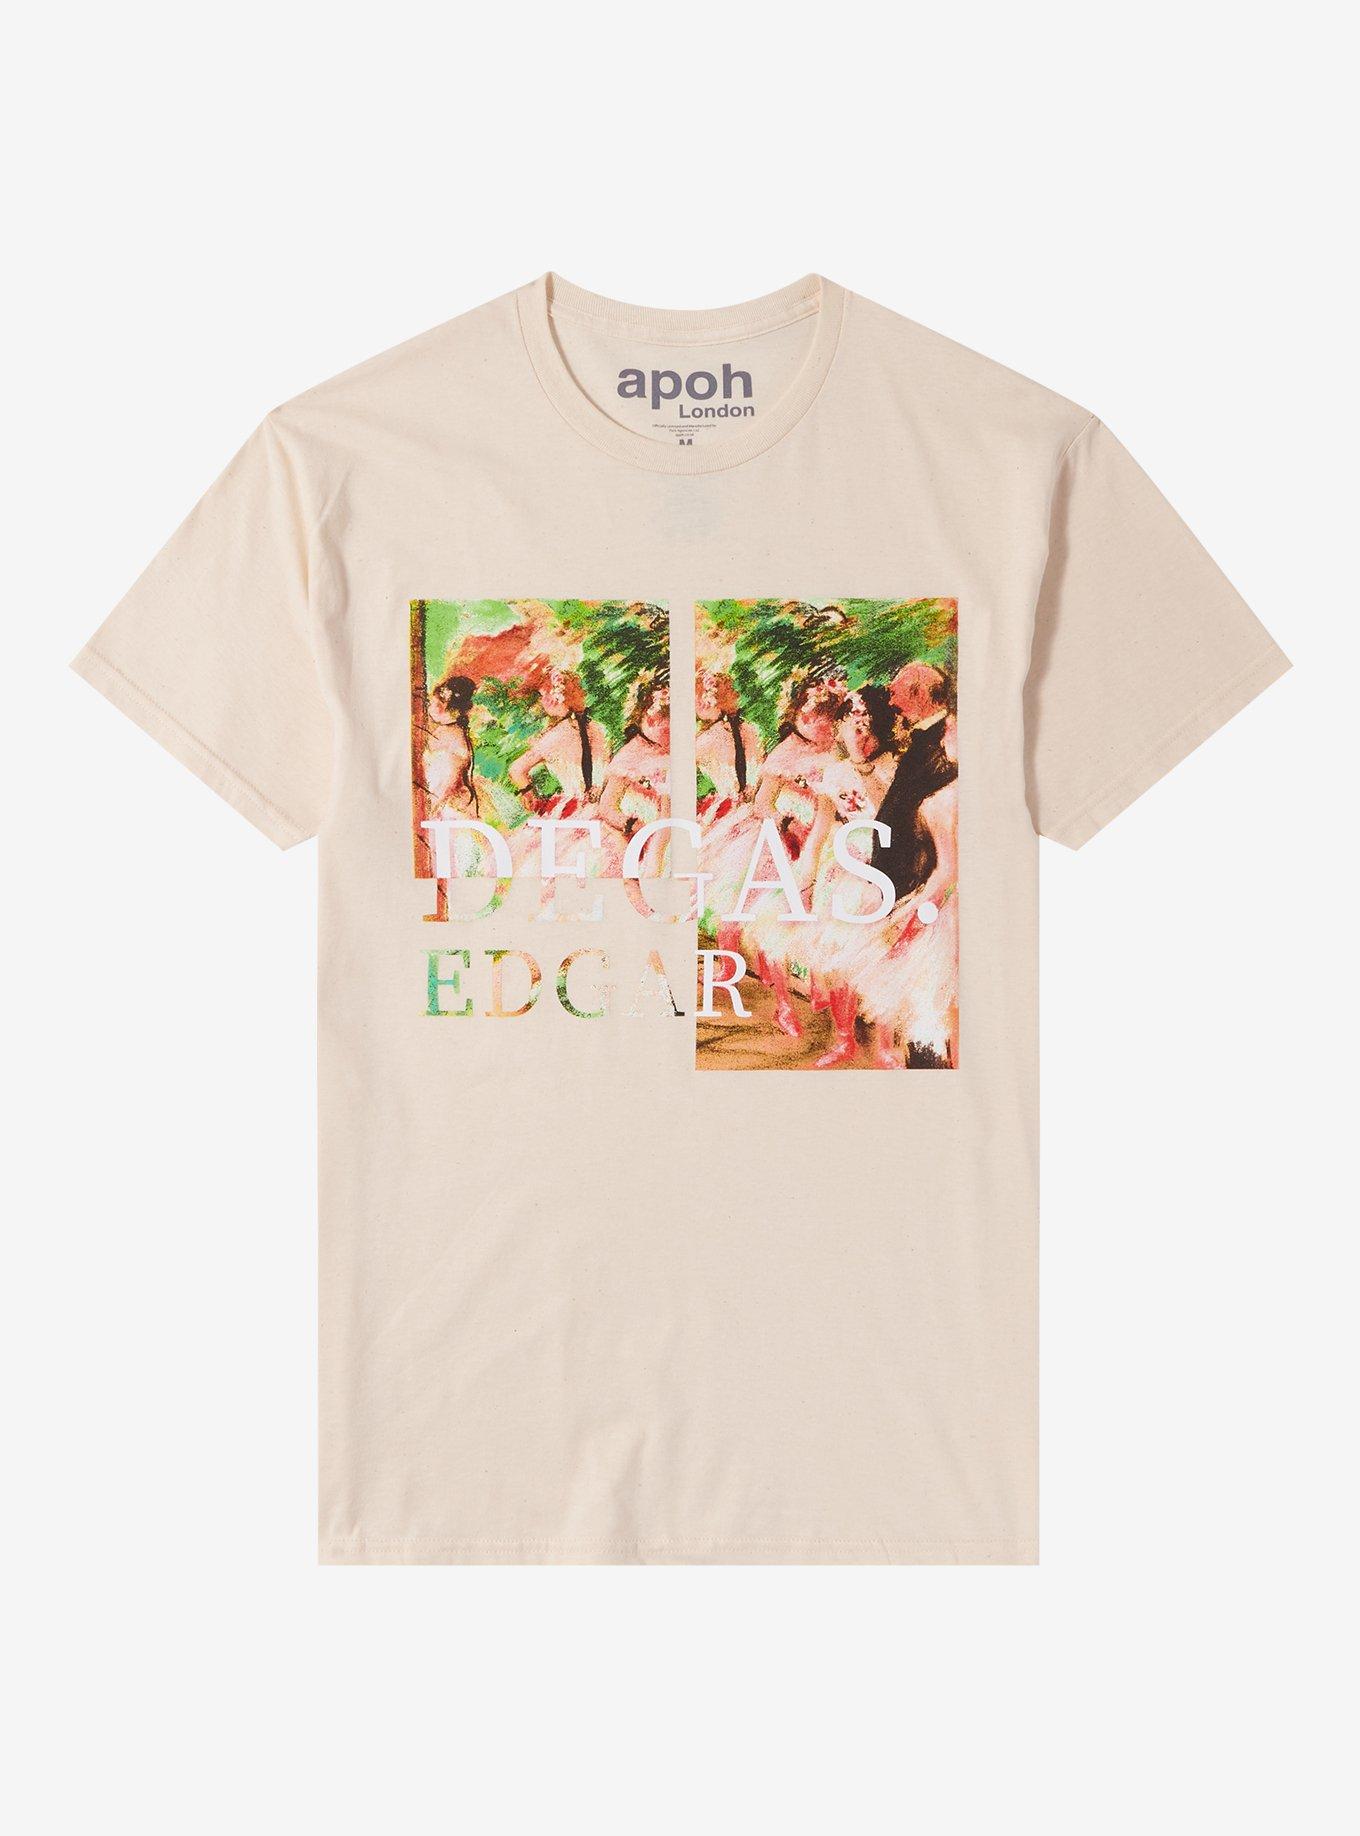 Apoh London Edgar Degas Artwork Panel Boyfriend Fit Girls T-Shirt, MULTI, hi-res